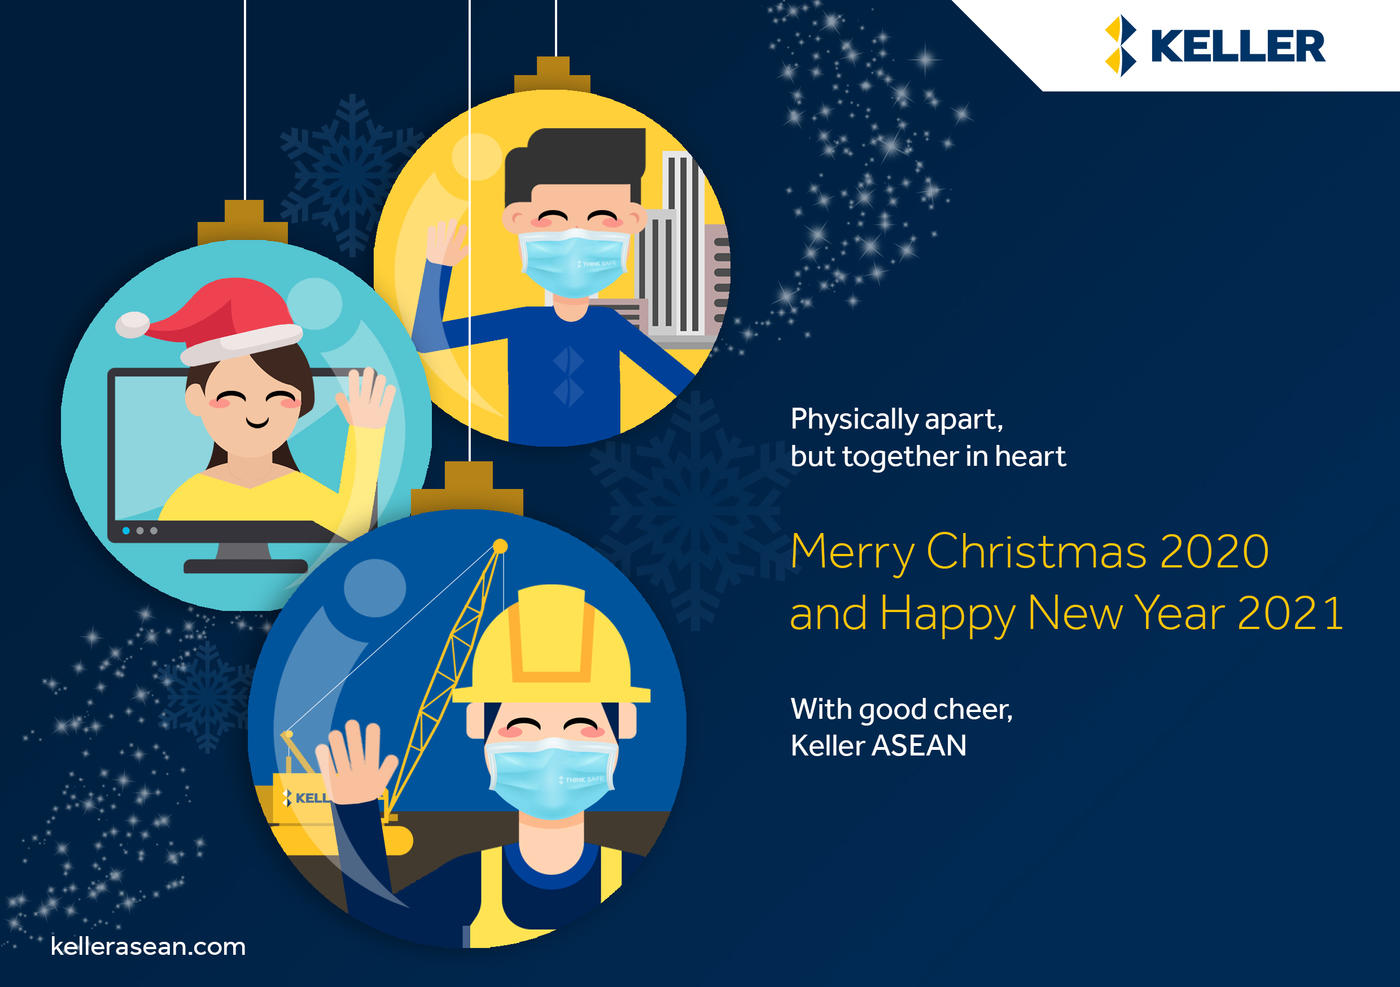 Keller ASEAN Holiday Greetings Christmas 2020 New Year 2021